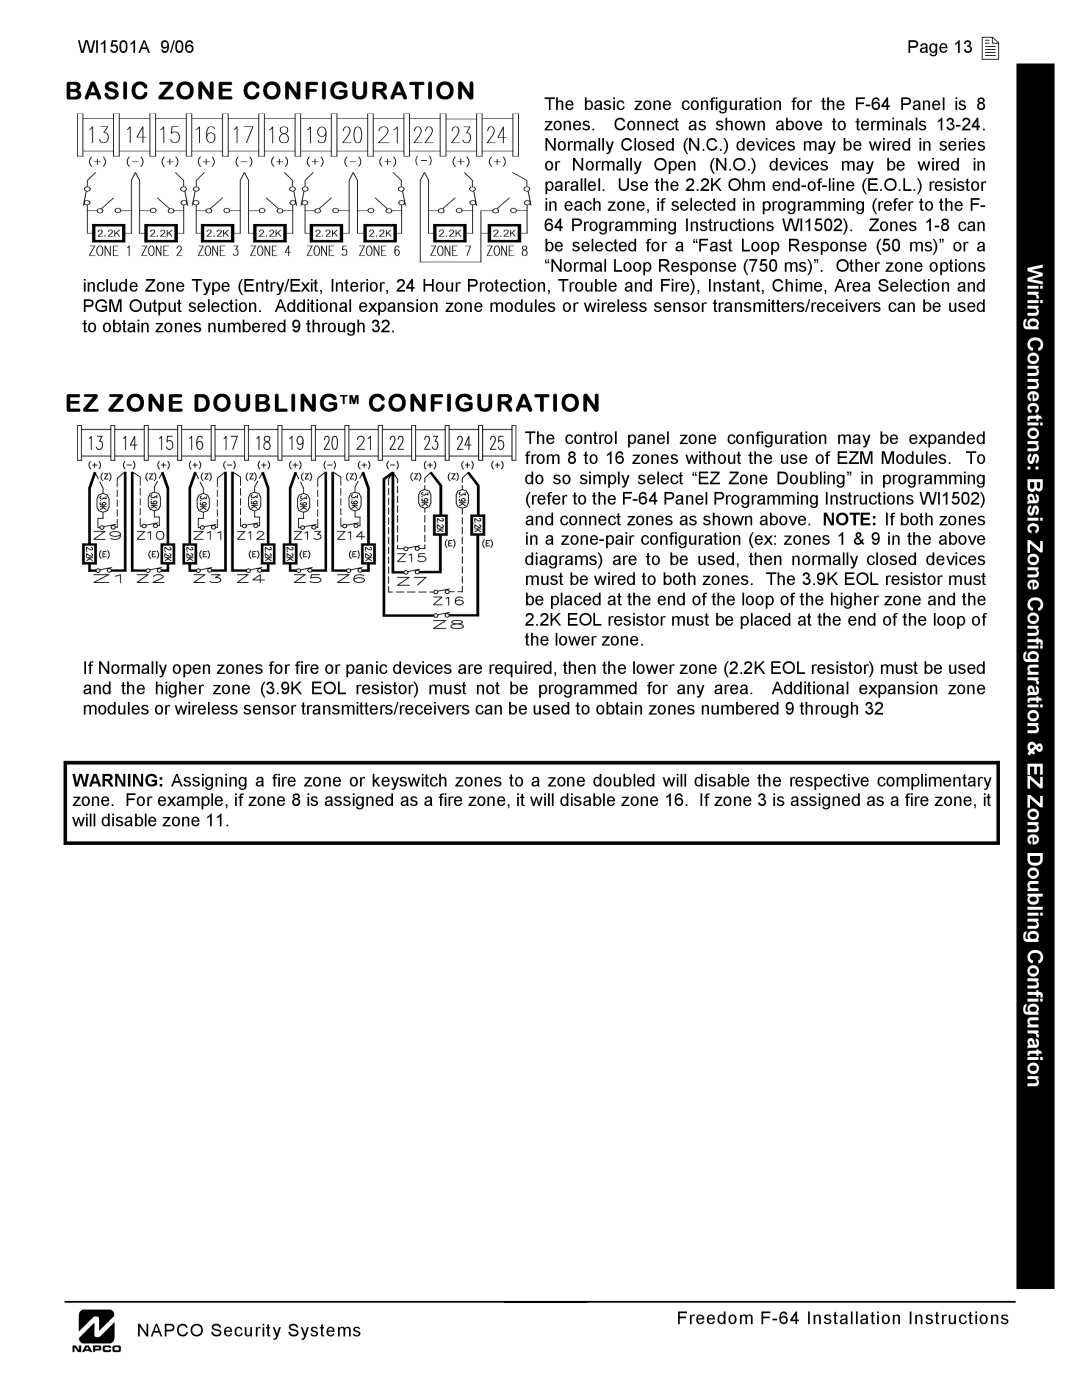 Napco Security Technologies WI1501A installation instructions Basic Zone Configuration, Ez Zone Doublingtm Configuration 